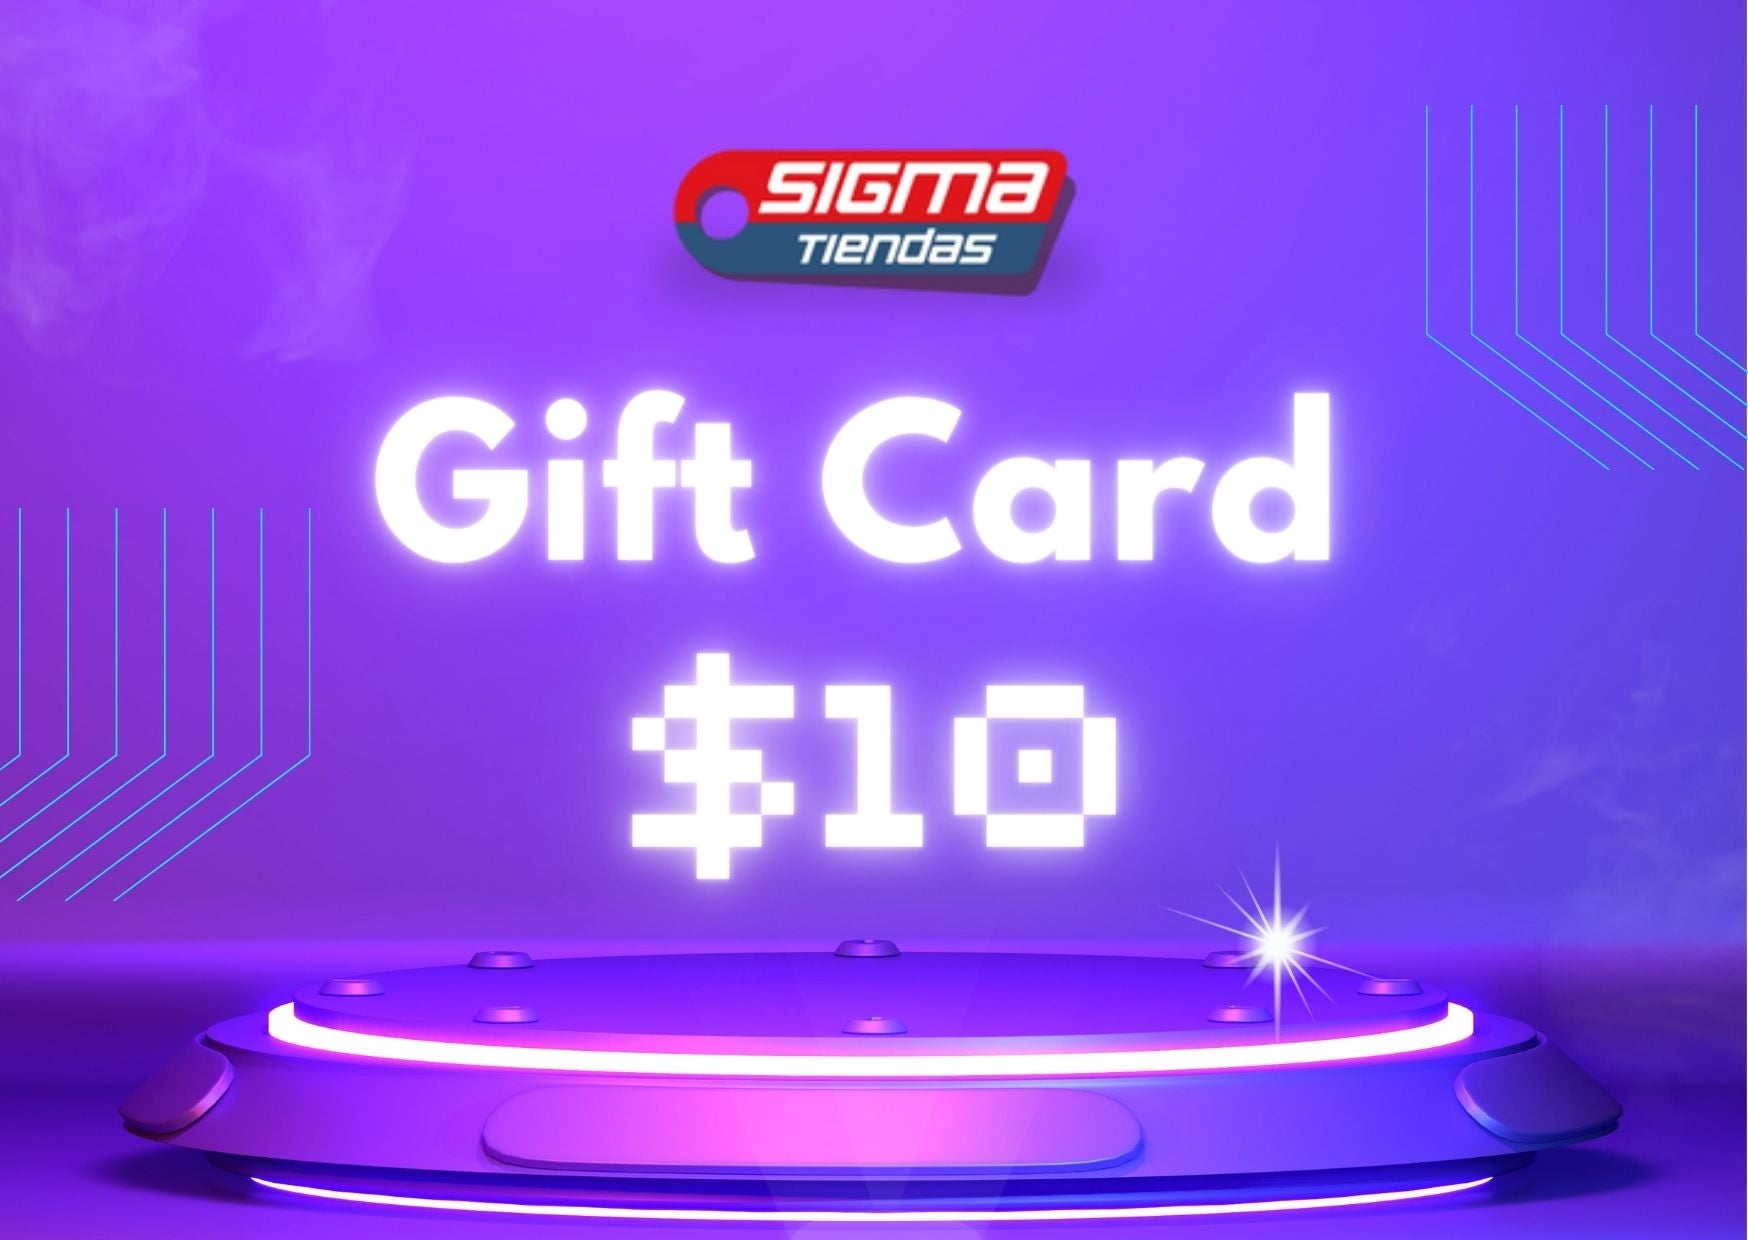 Gift Card Sigma $10